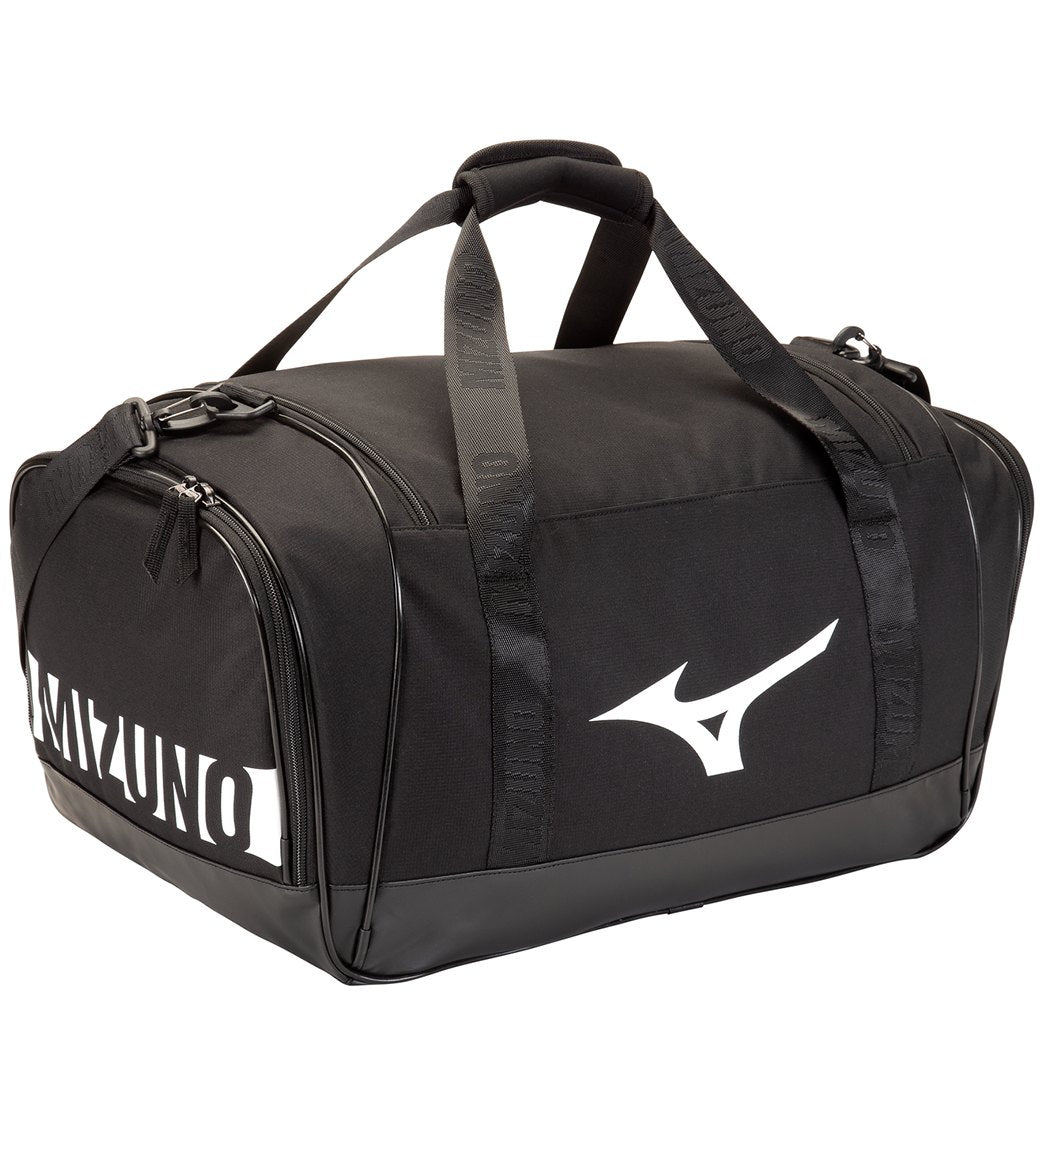 Mizuno All Sport Duffle Bag - Black - Swimoutlet.com